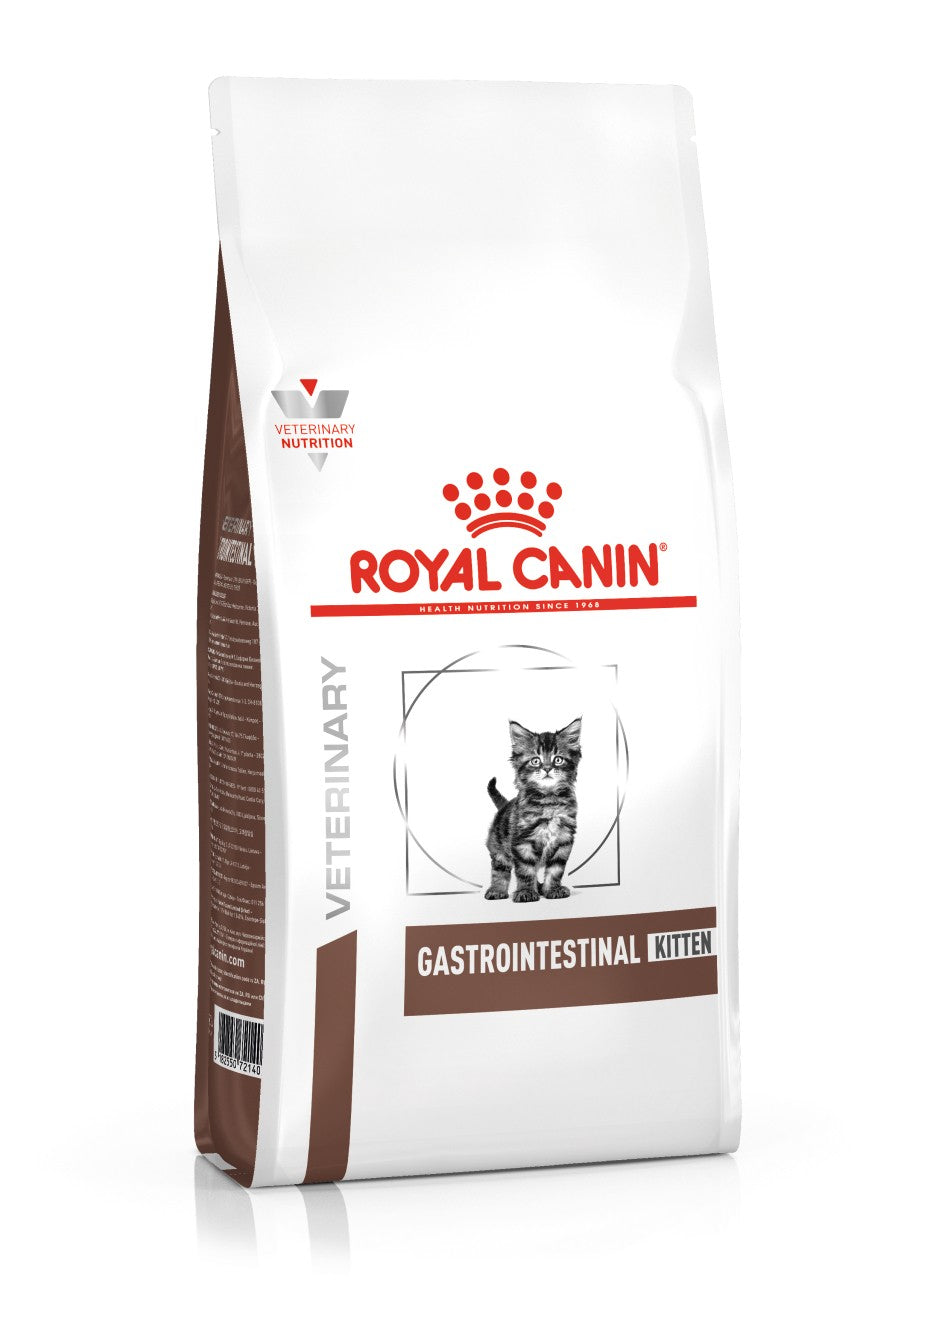 Royal Canin Gastrointestinal gattino 2kg